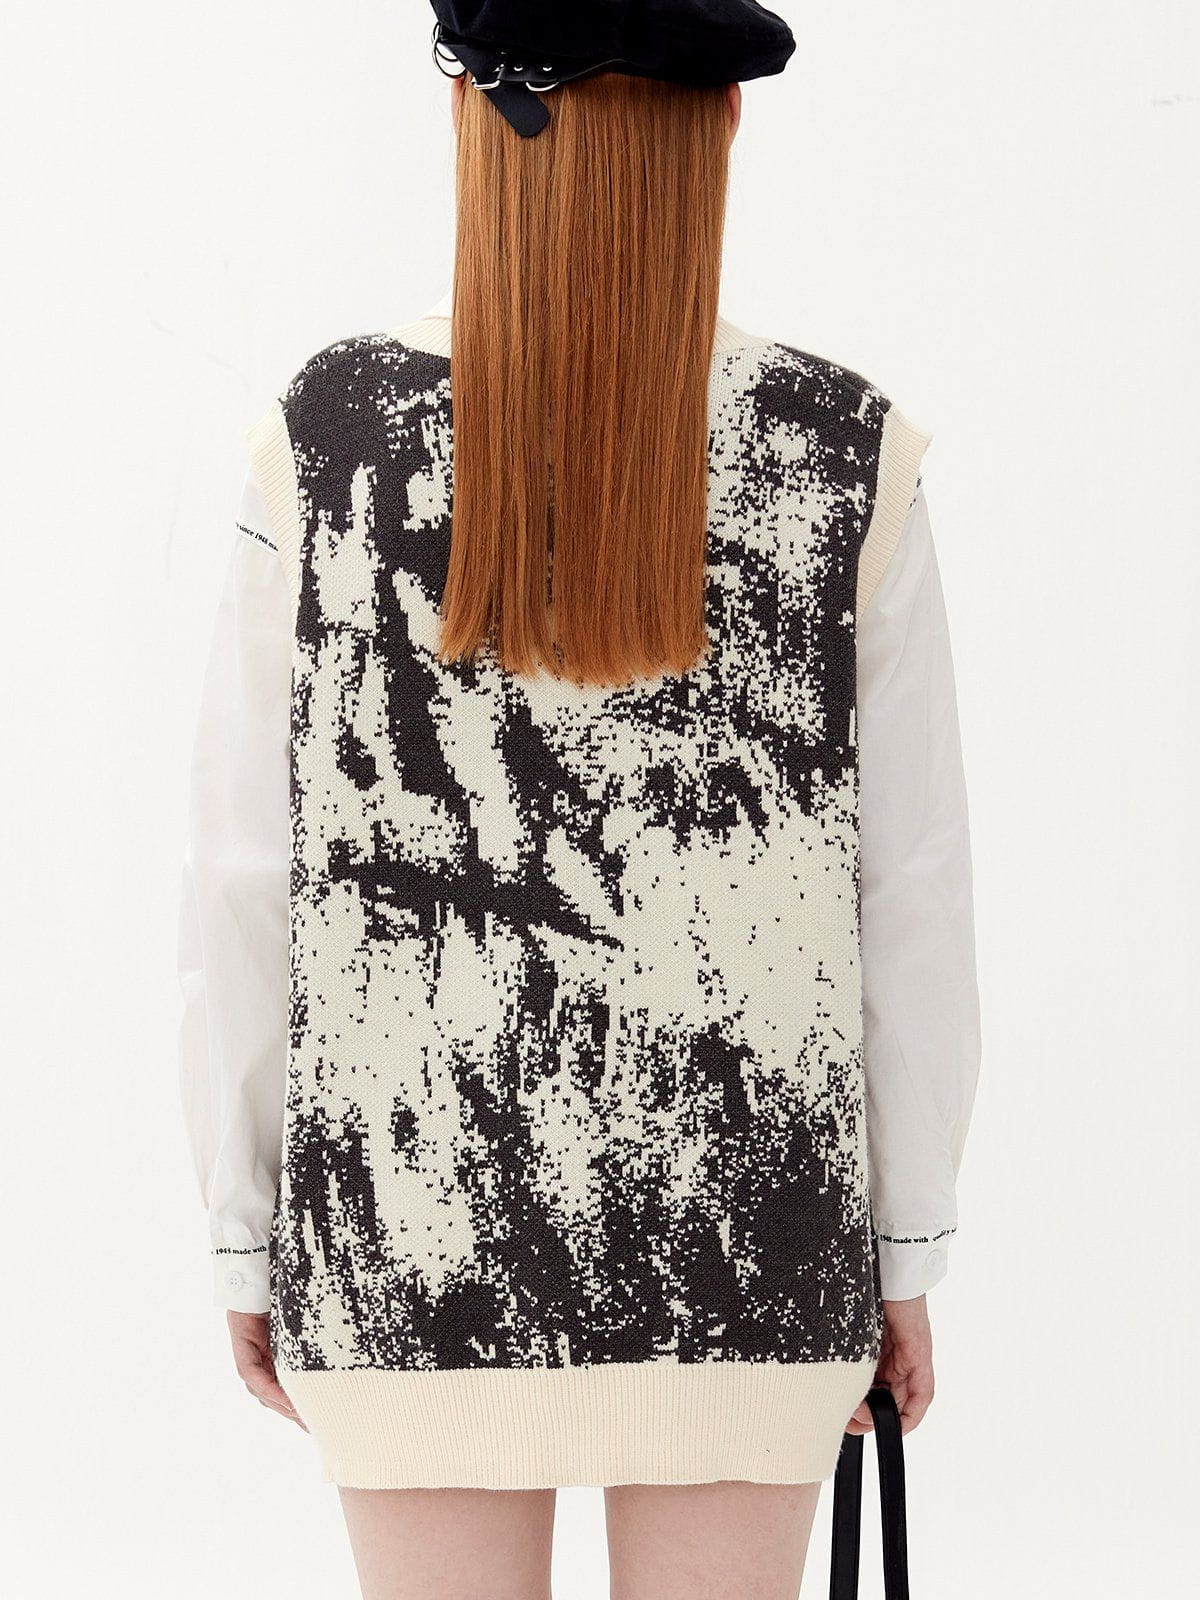 Majesda® - Tie Dye Jacquard Sweater Vest outfit ideas streetwear fashion